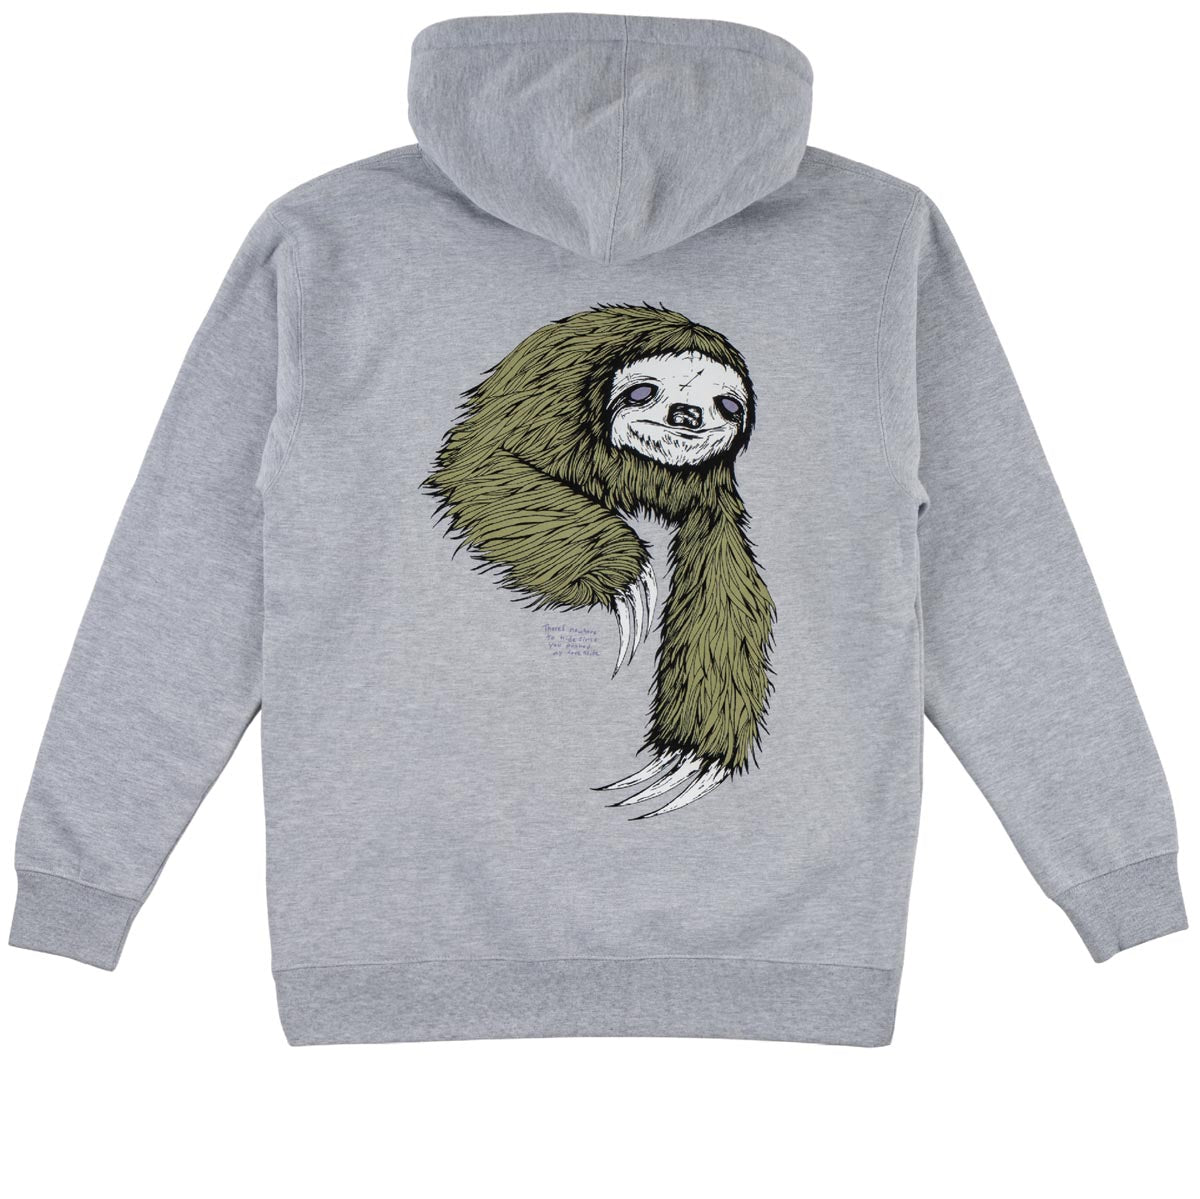 Welcome Sloth Hoodie - Heather Grey/Sage image 1